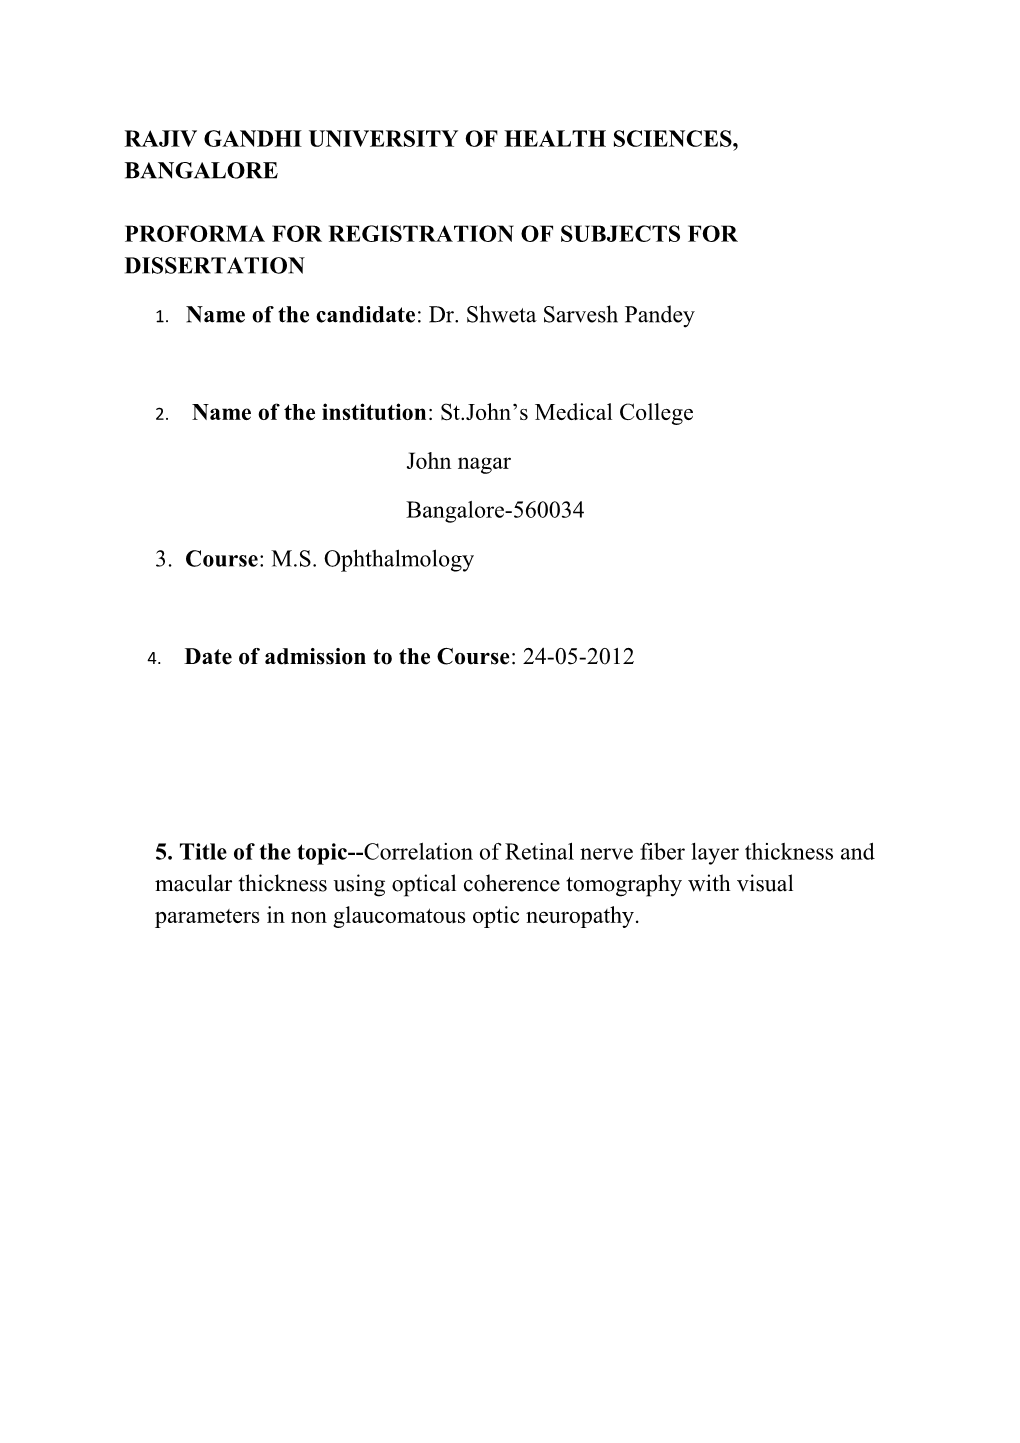 Rajiv Gandhi University of Health Sciences, Bangalore Proforma for Registration of Subjects